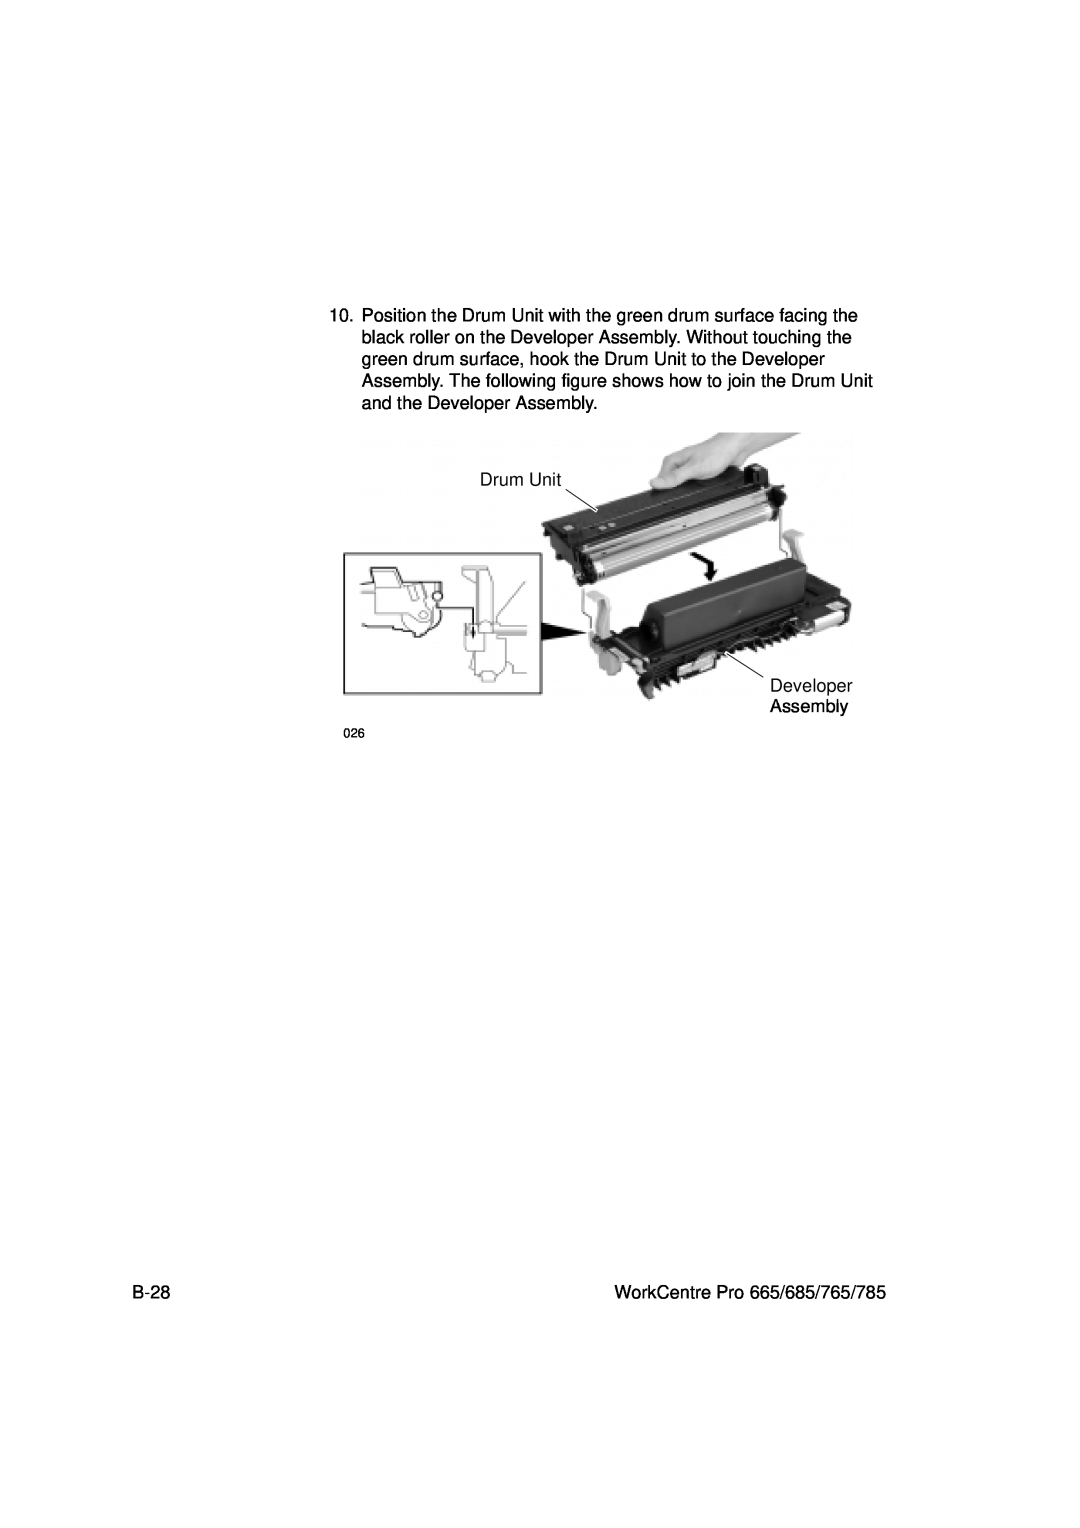 Xerox manual Drum Unit Developer Assembly, B-28, WorkCentre Pro 665/685/765/785 